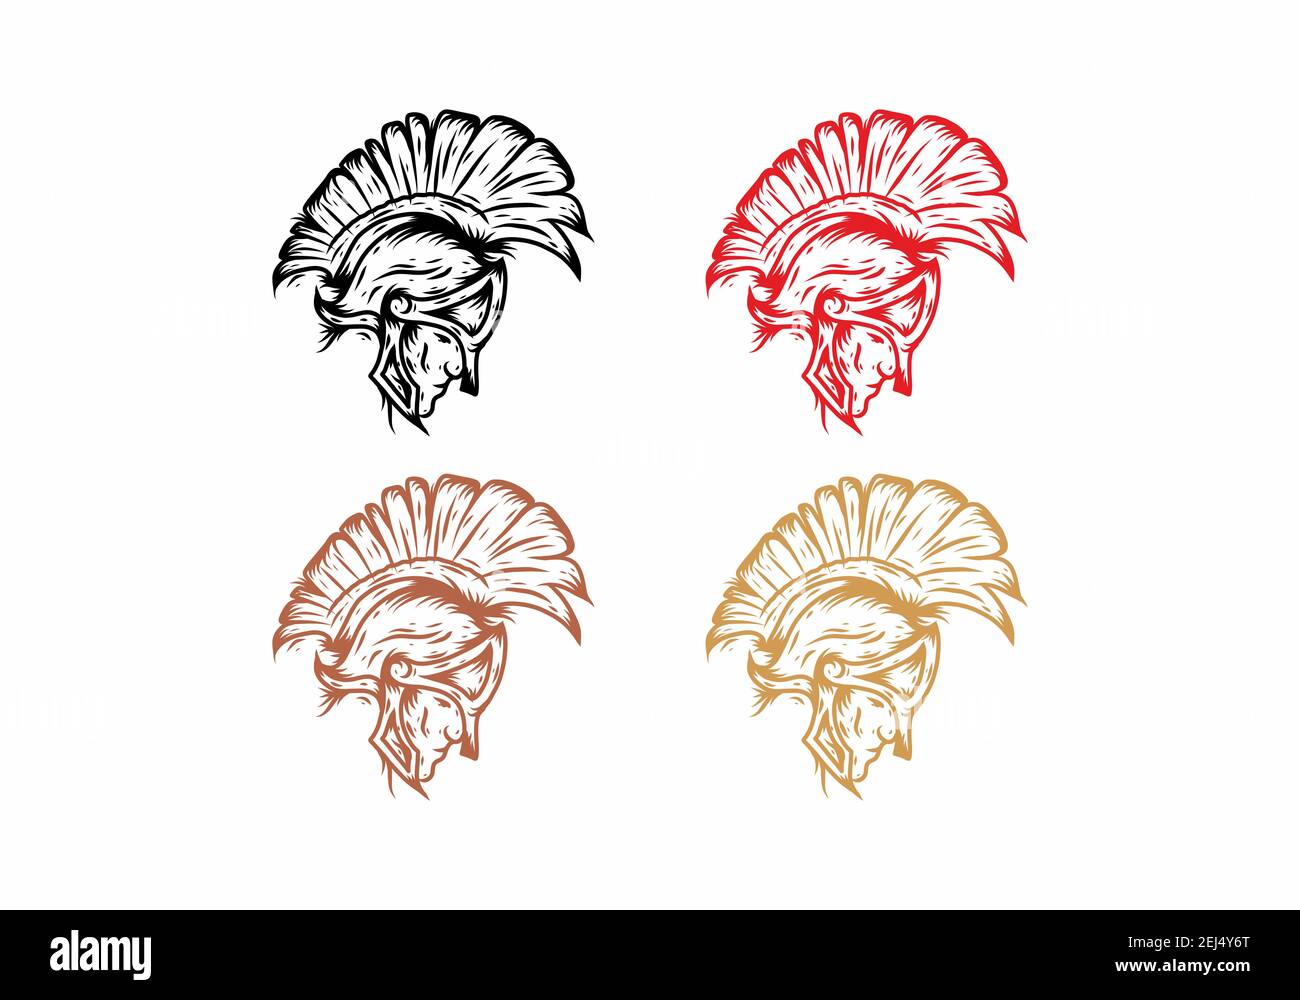 Line art drawing of spartan warriors Stock Vector